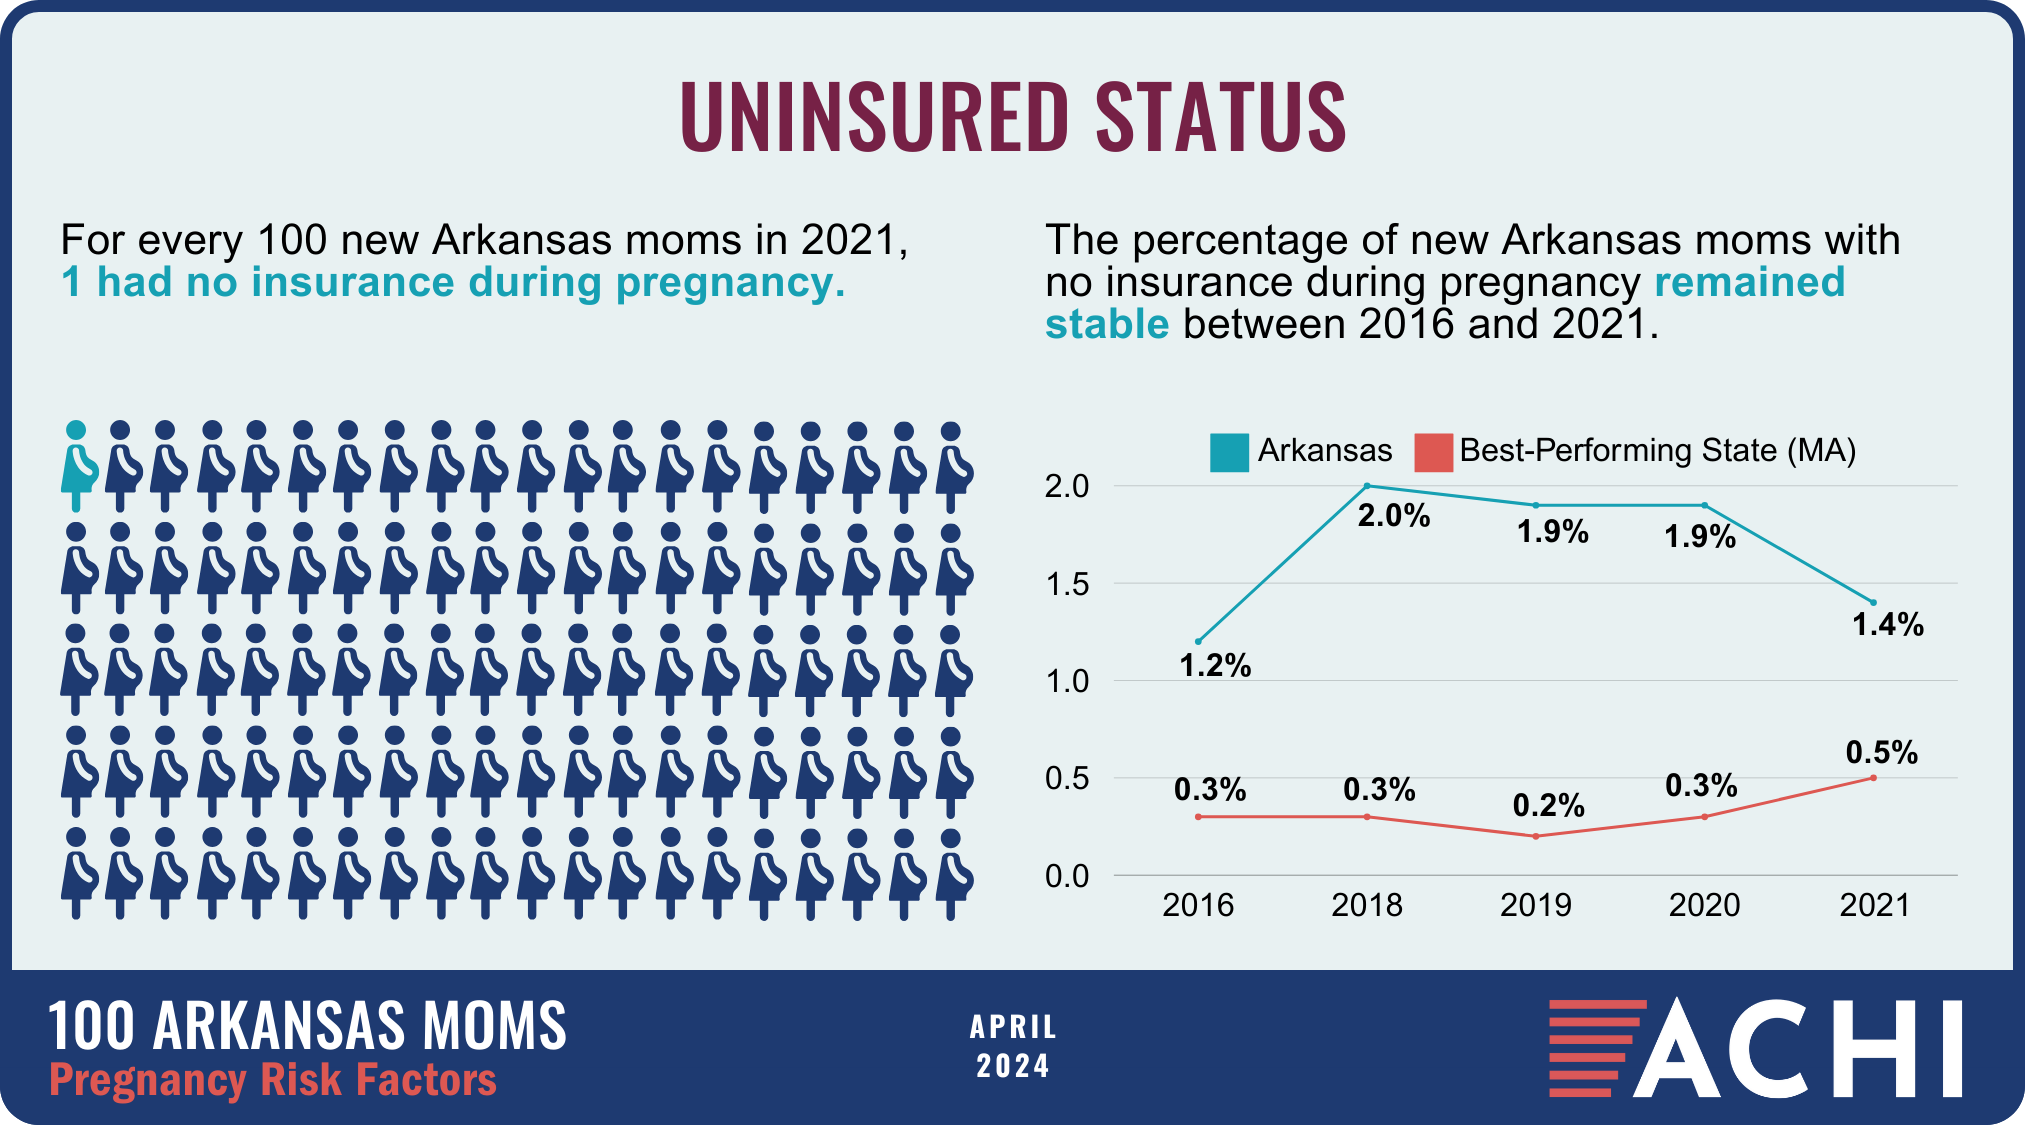 12_240416C_100 Arkansas Moms_Pregnancy Risk Factors_Uninsured Status